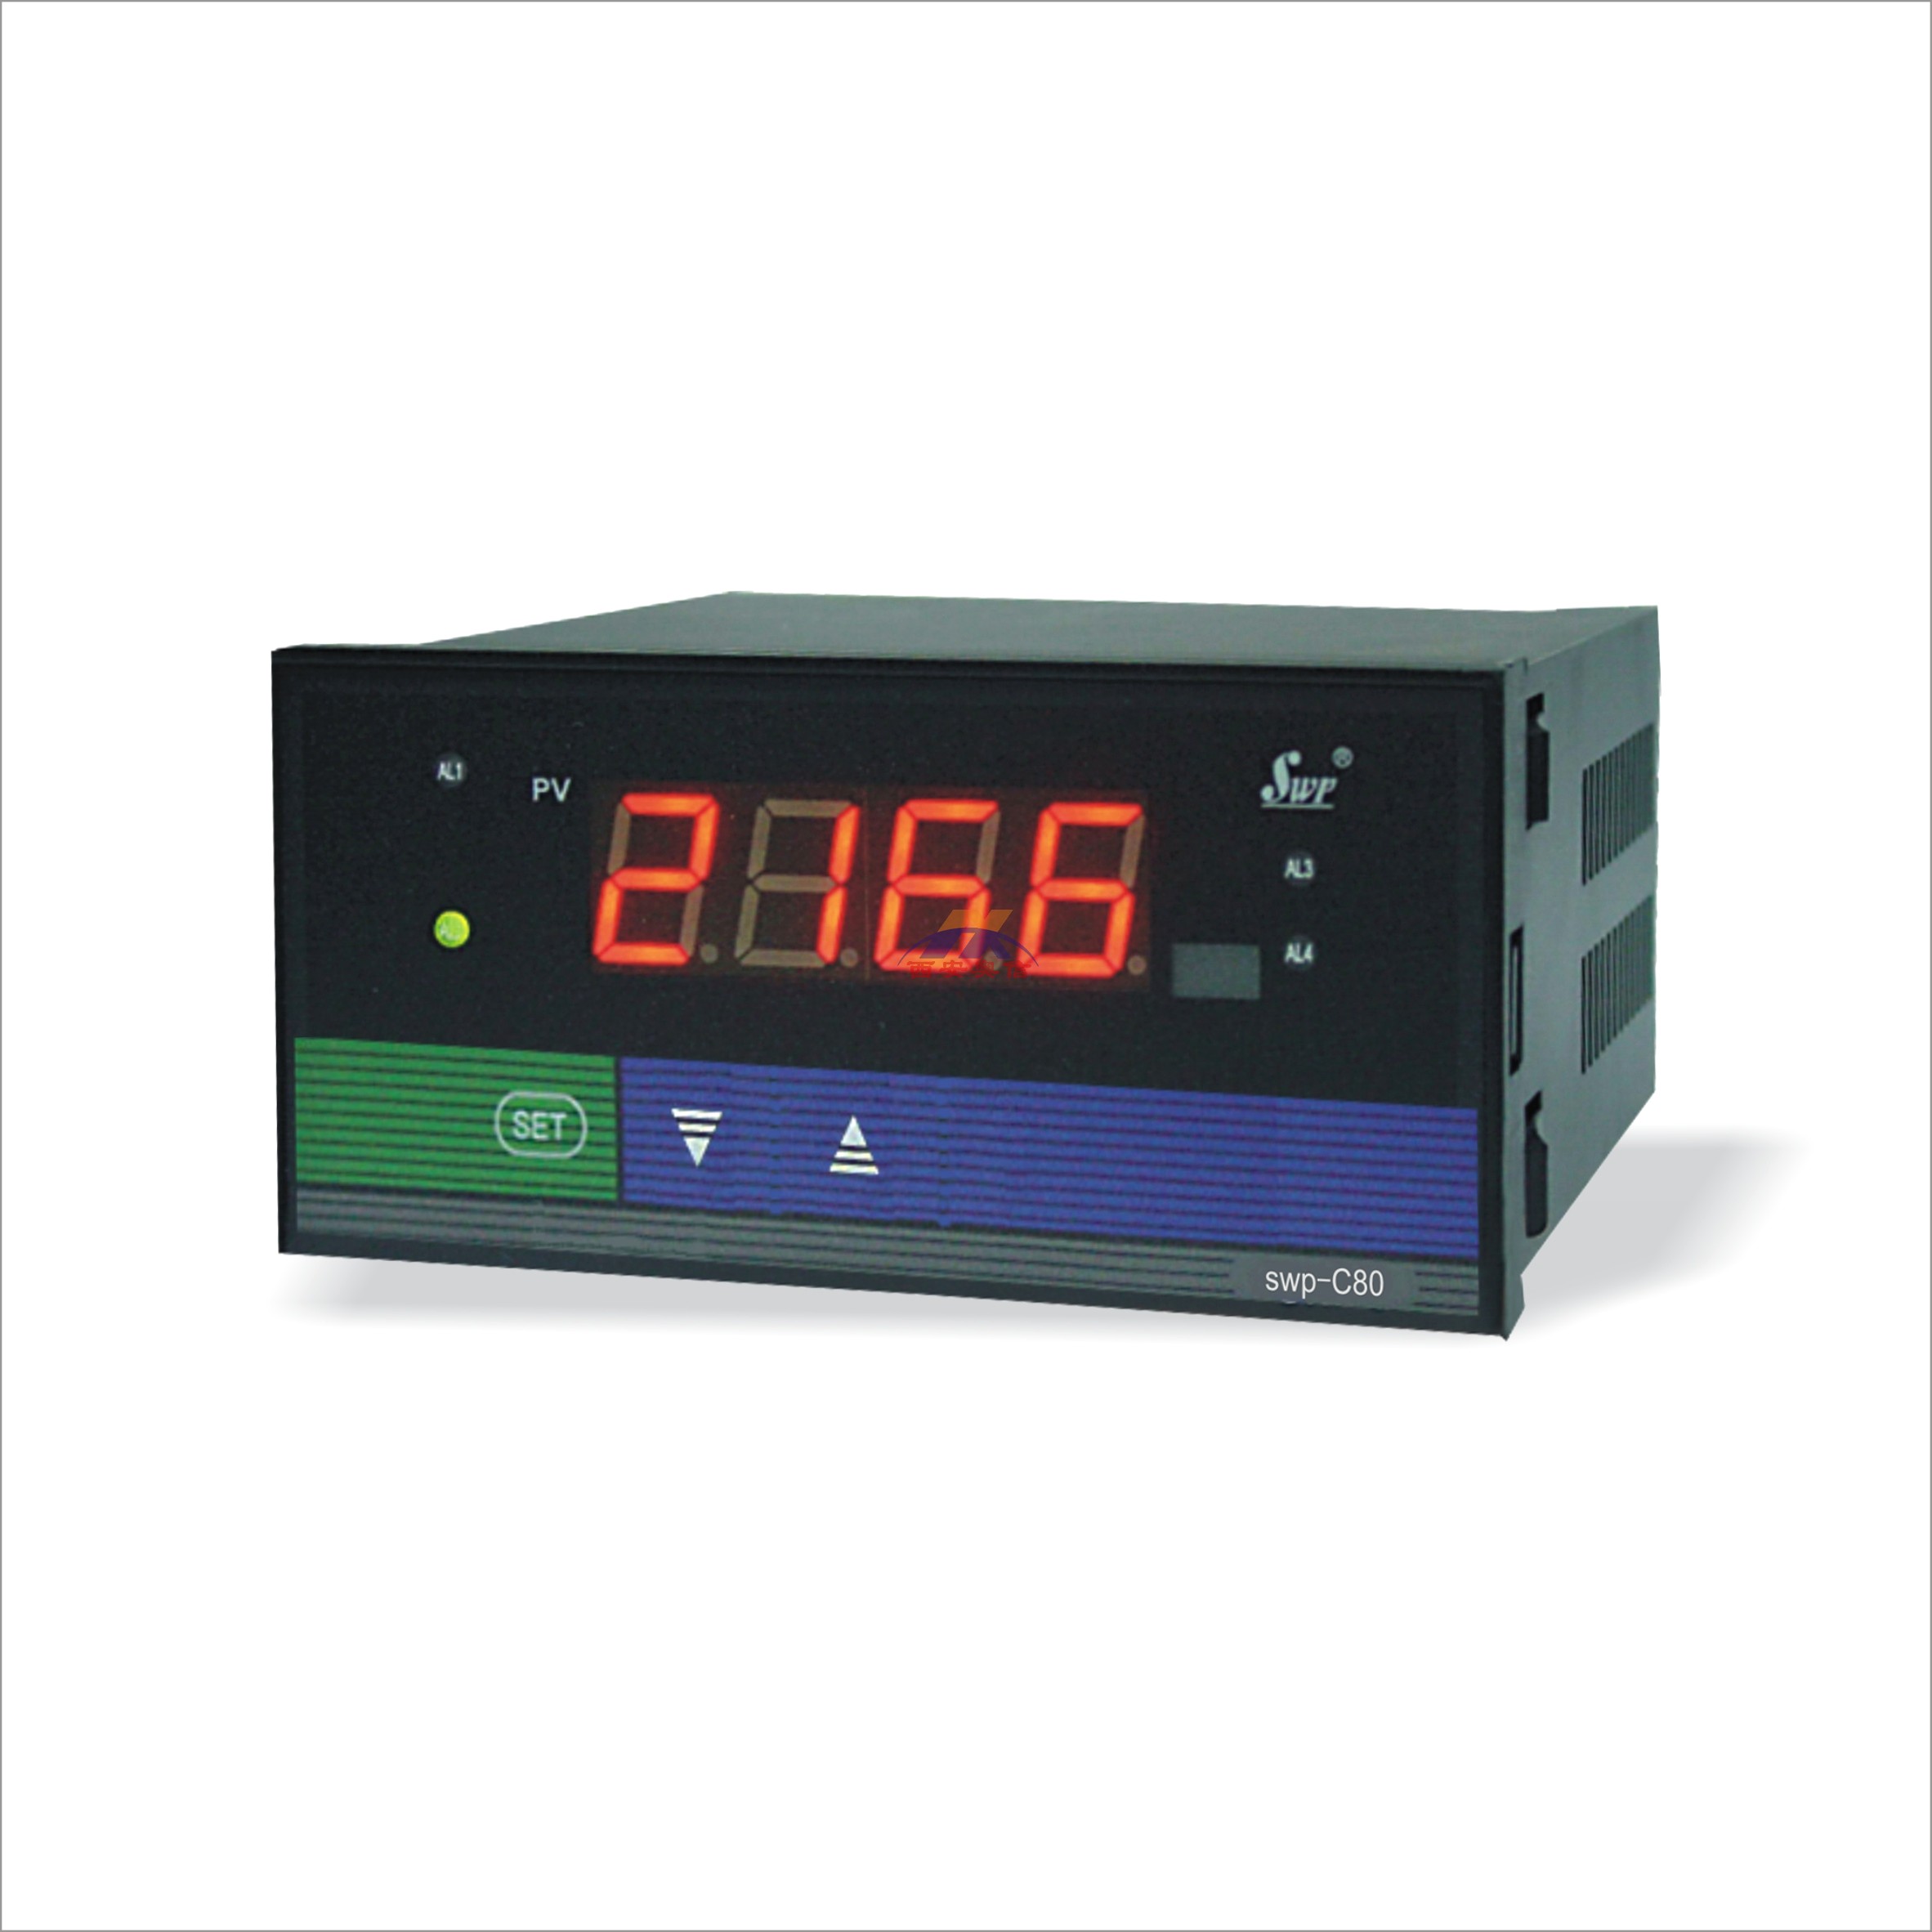 昌晖SWP-C803-01-23-HL温度数显仪SWP-LED单回路数显控制仪